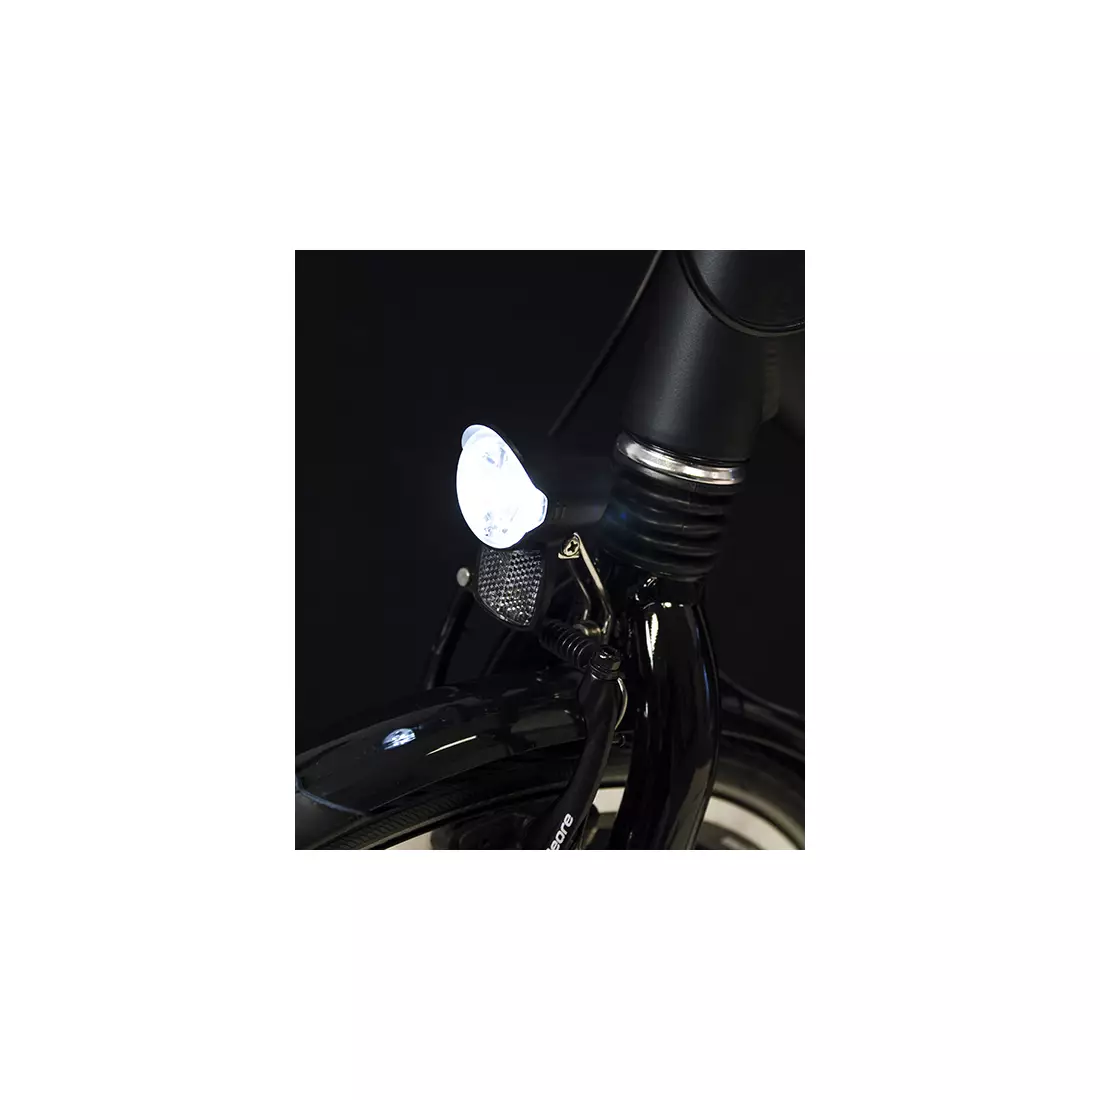 Predné svietidlo na bicykel SPANNINGA BRIO 15 lux/80 lumenov pod dynamom SNG-H634008